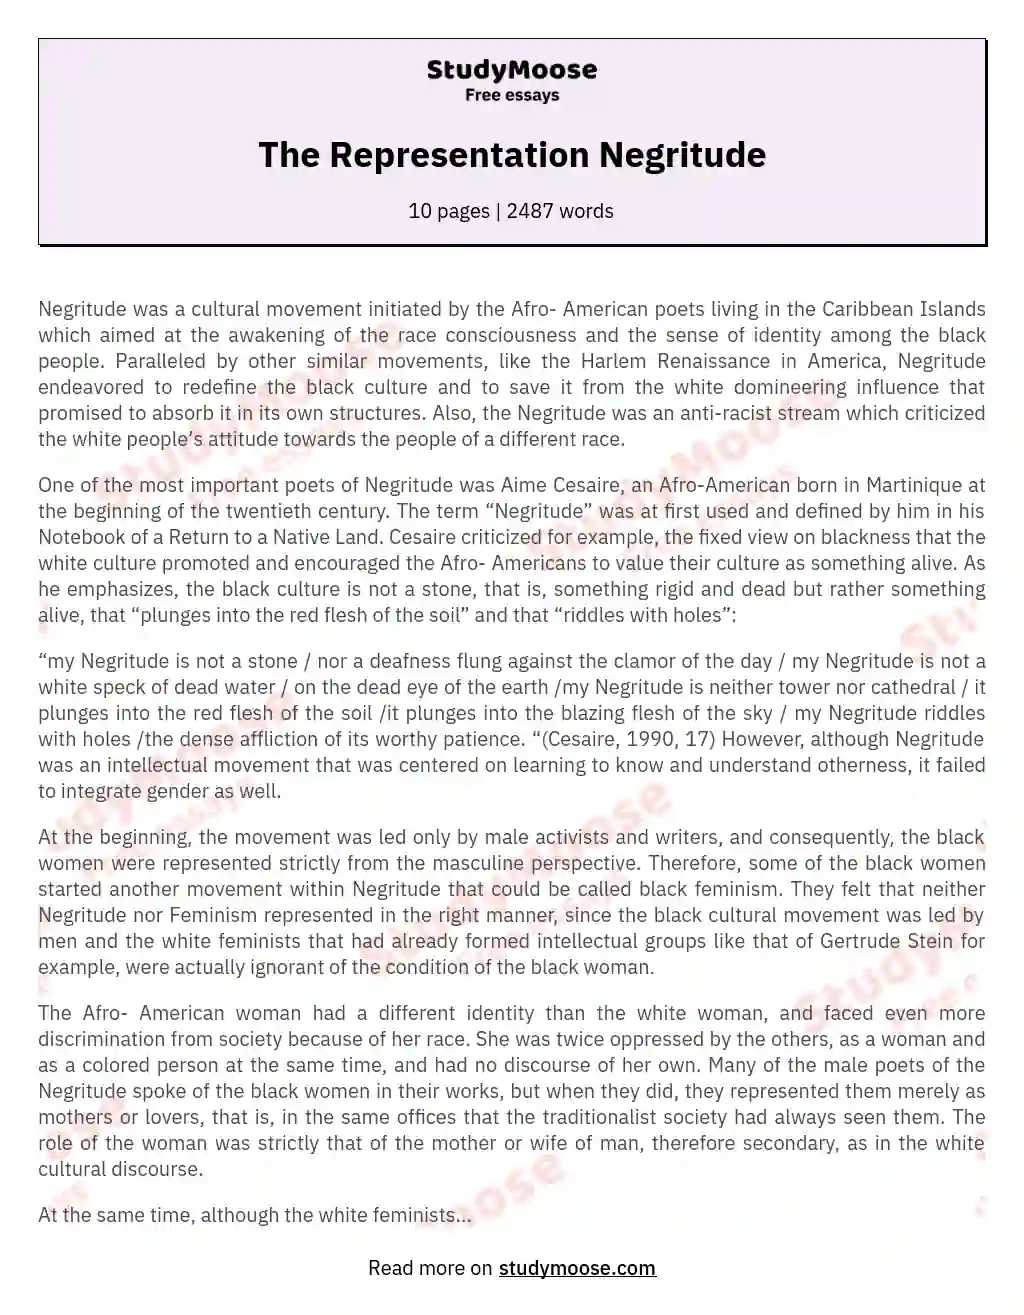 The Representation Negritude essay